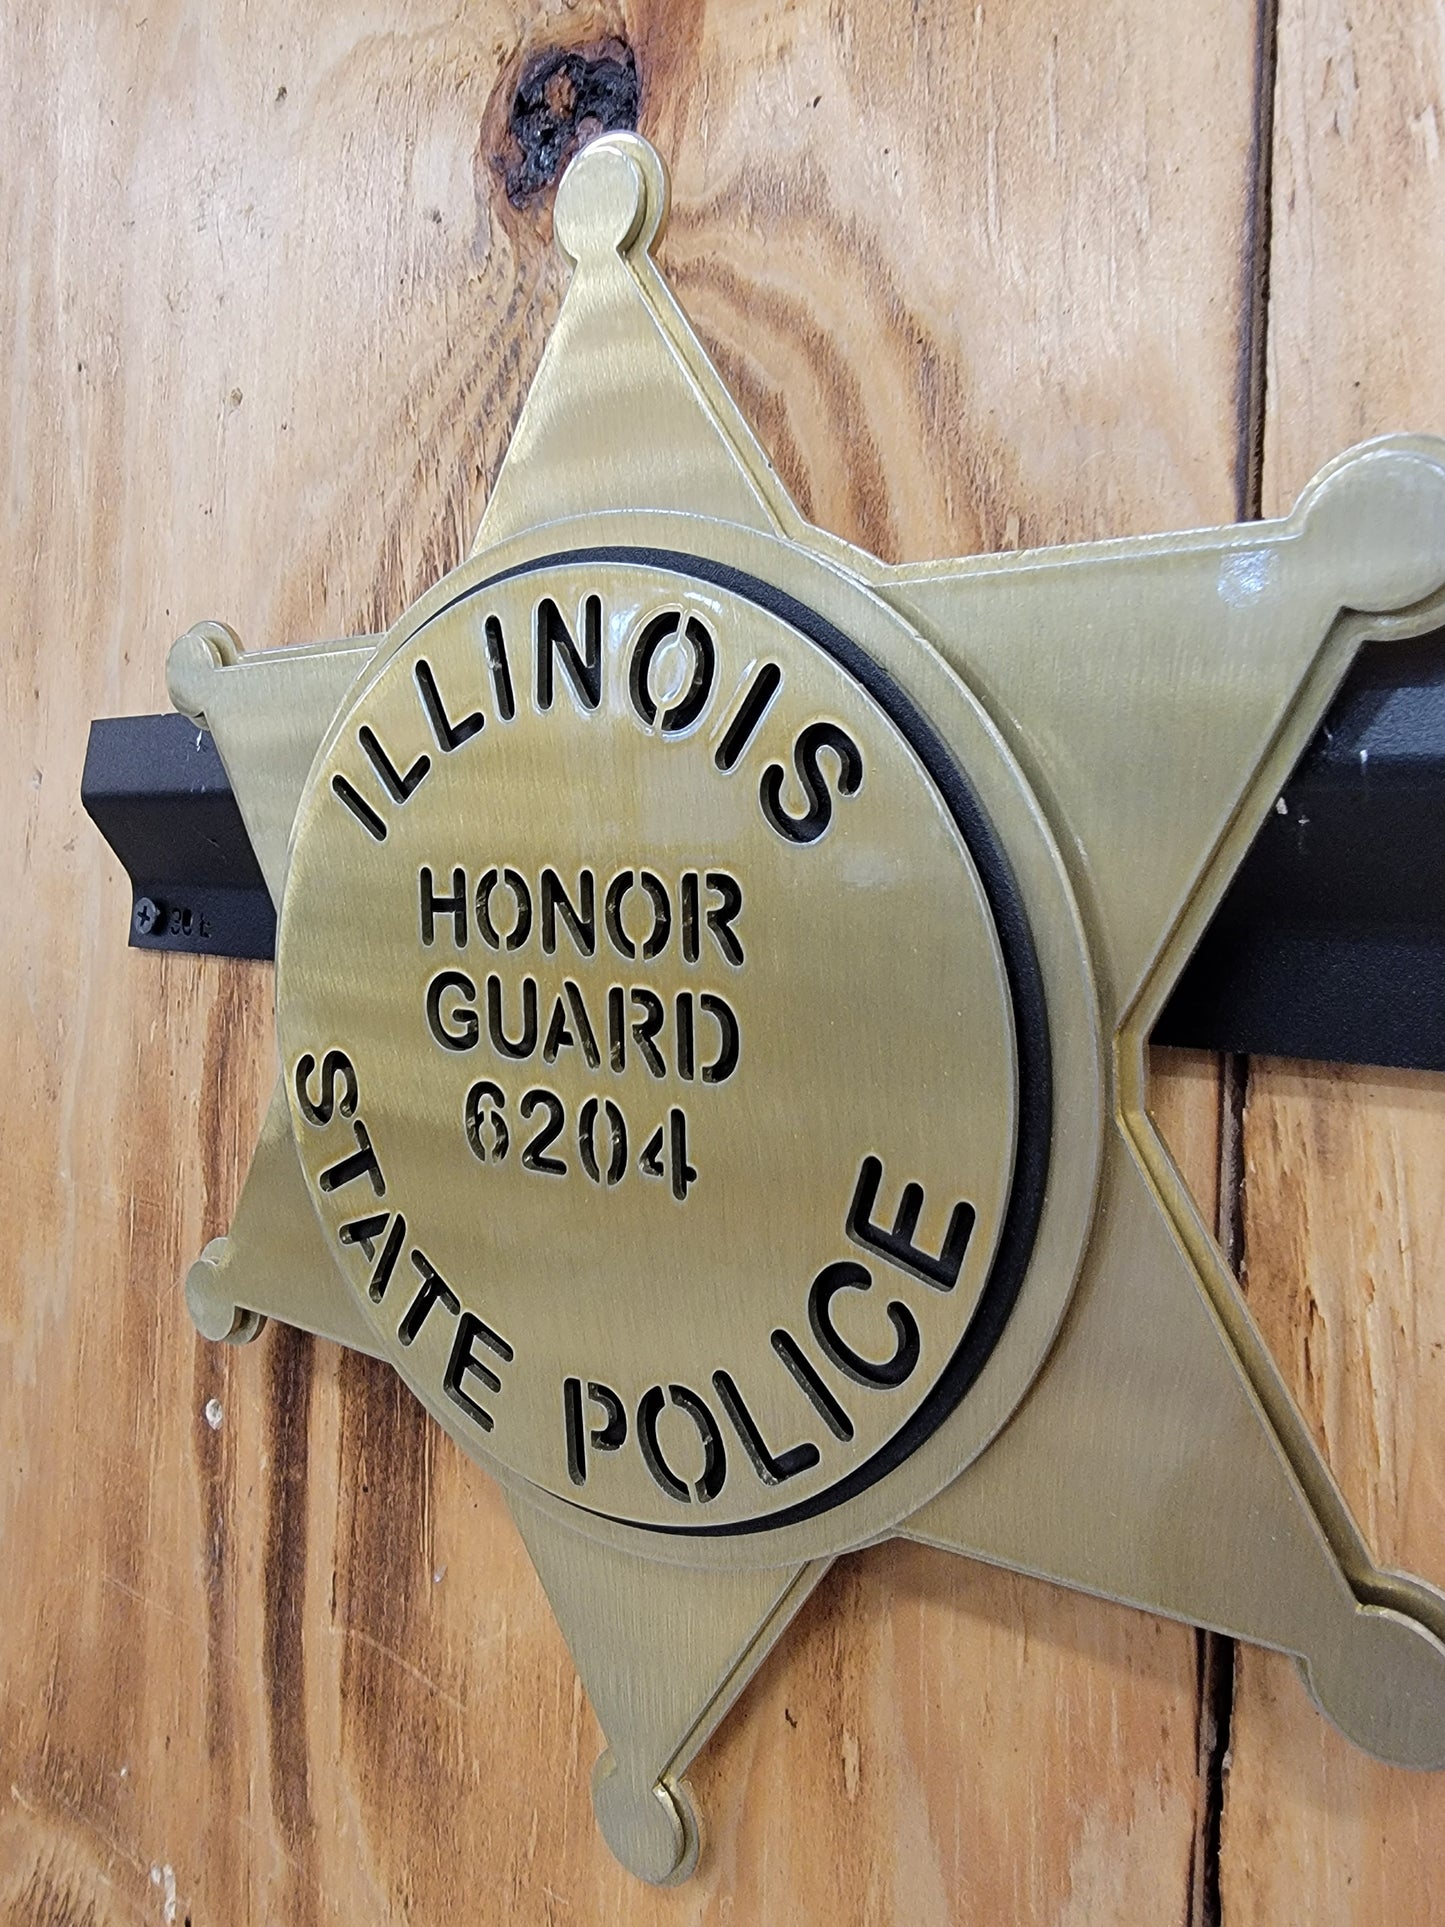 Illinois State Police Honor Guard Badge